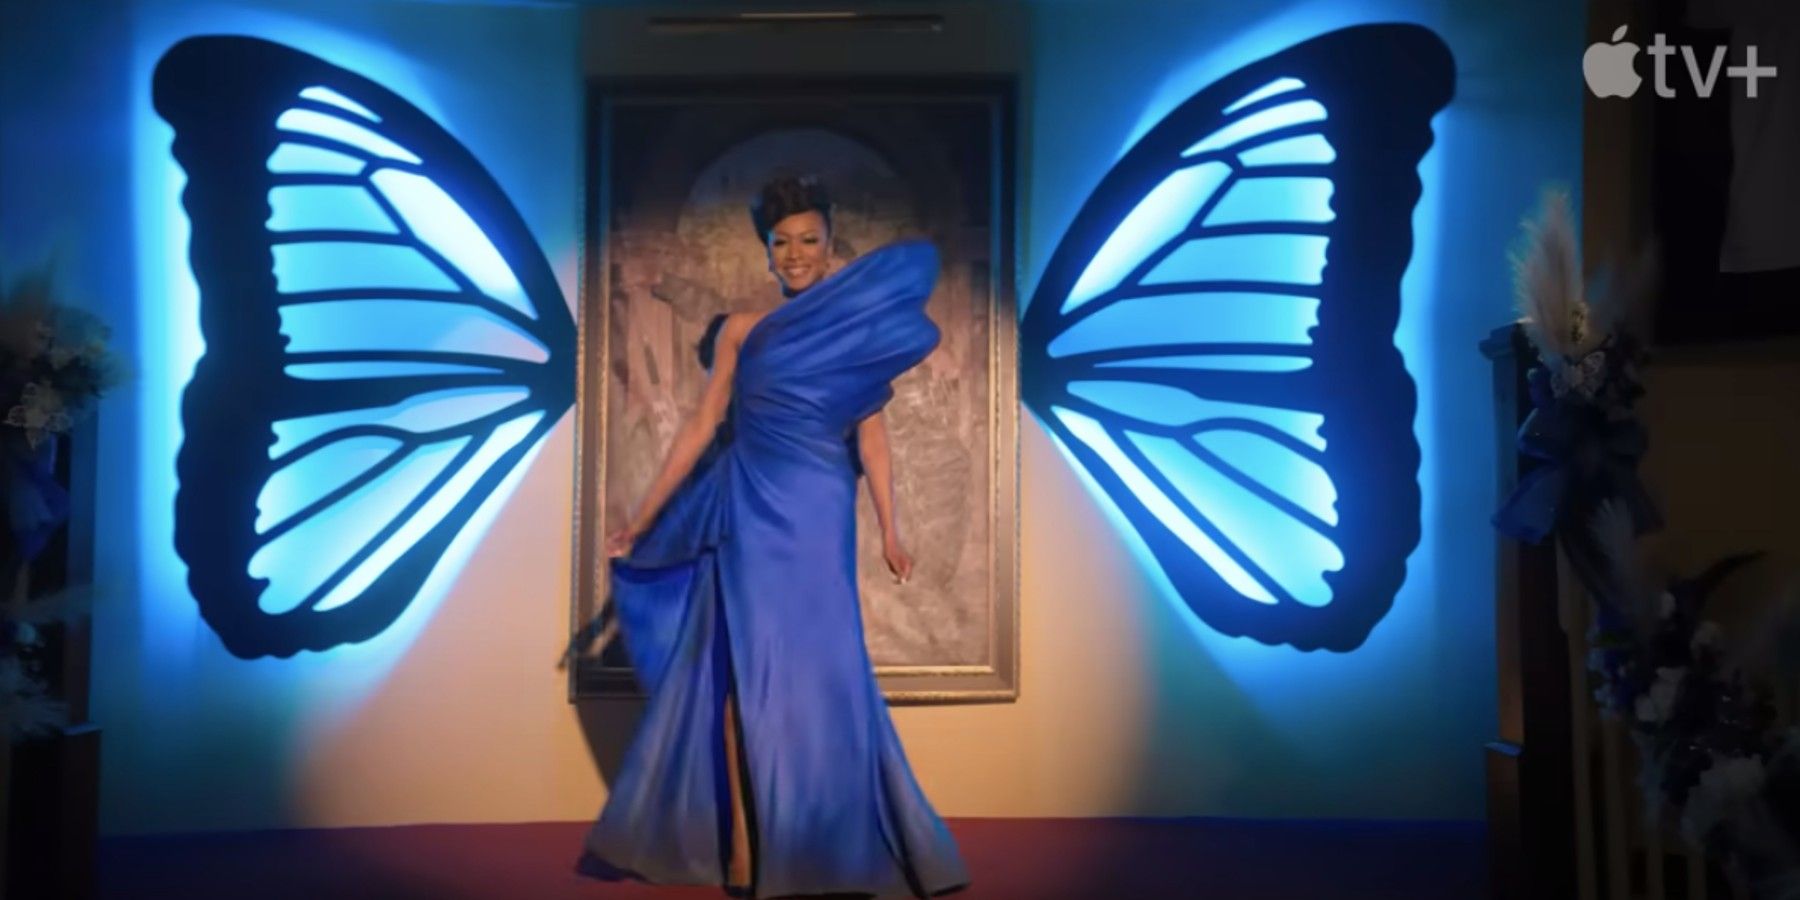 Butterfly dress in The Big Door Prize trailer